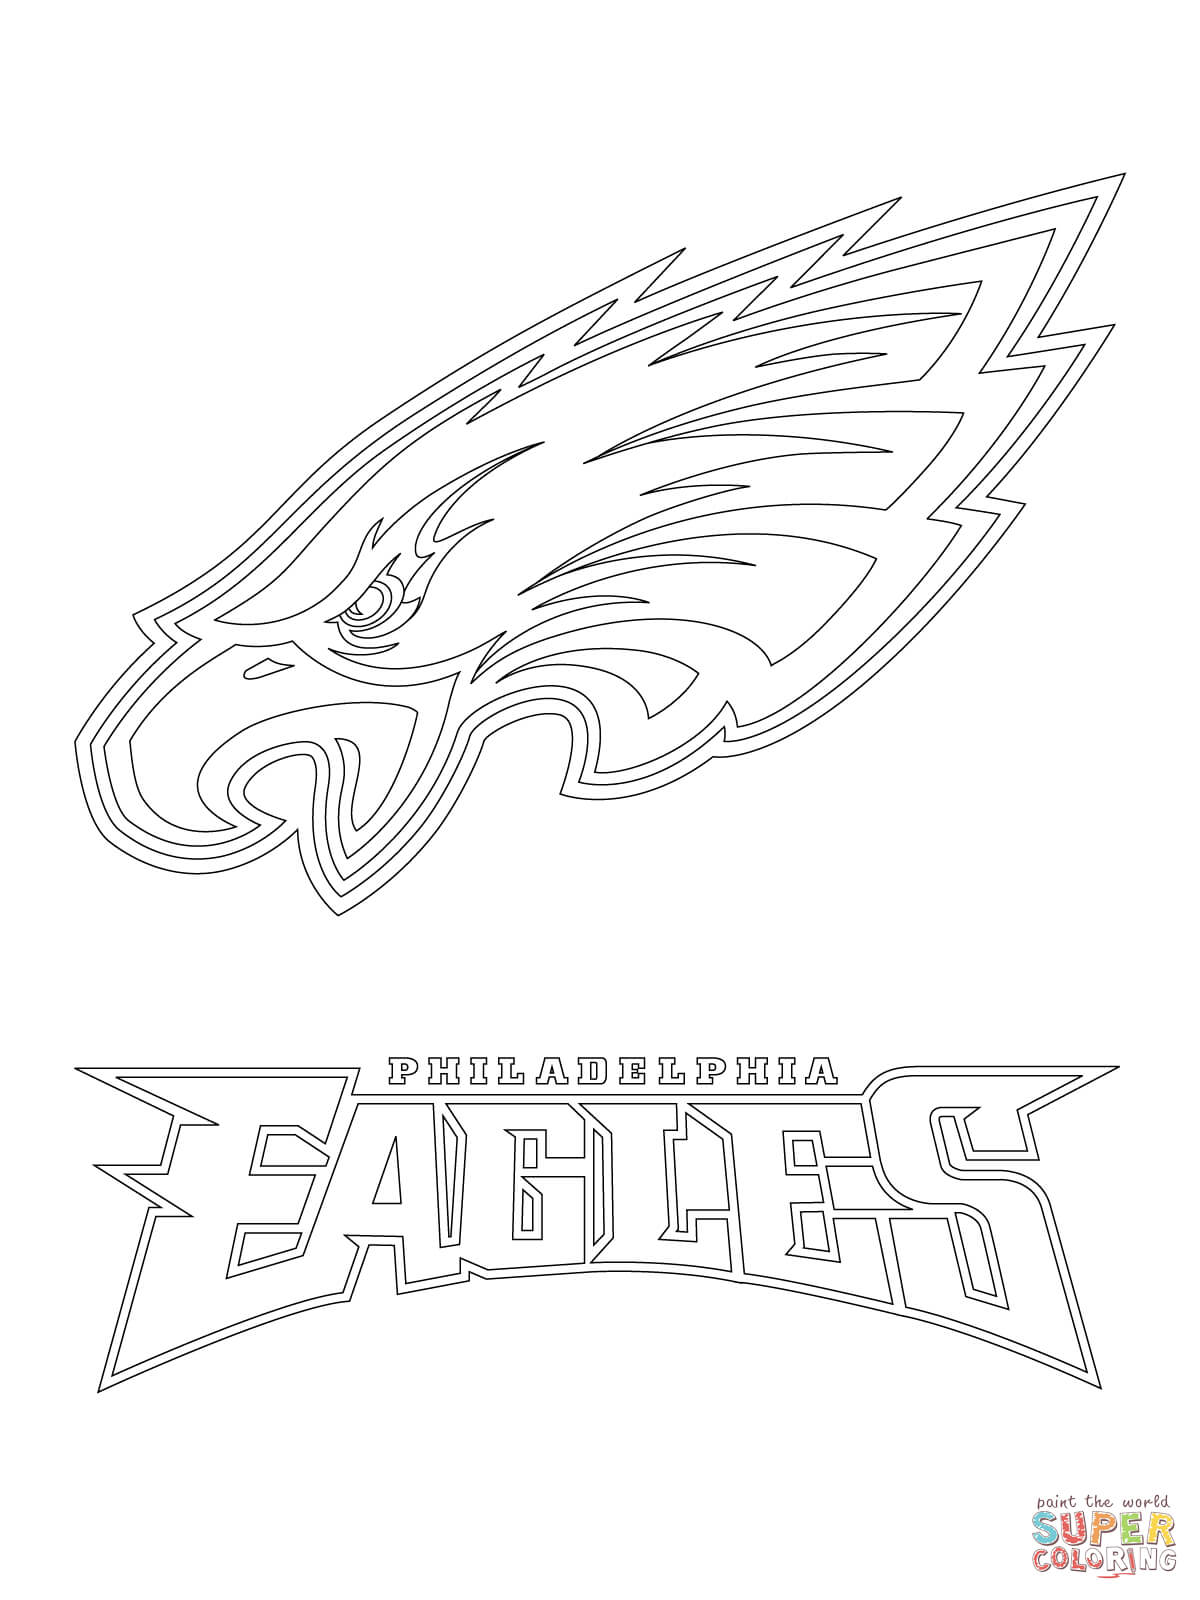 Black and White Eagle Football Logo - Philadelphia Eagles Logo coloring page